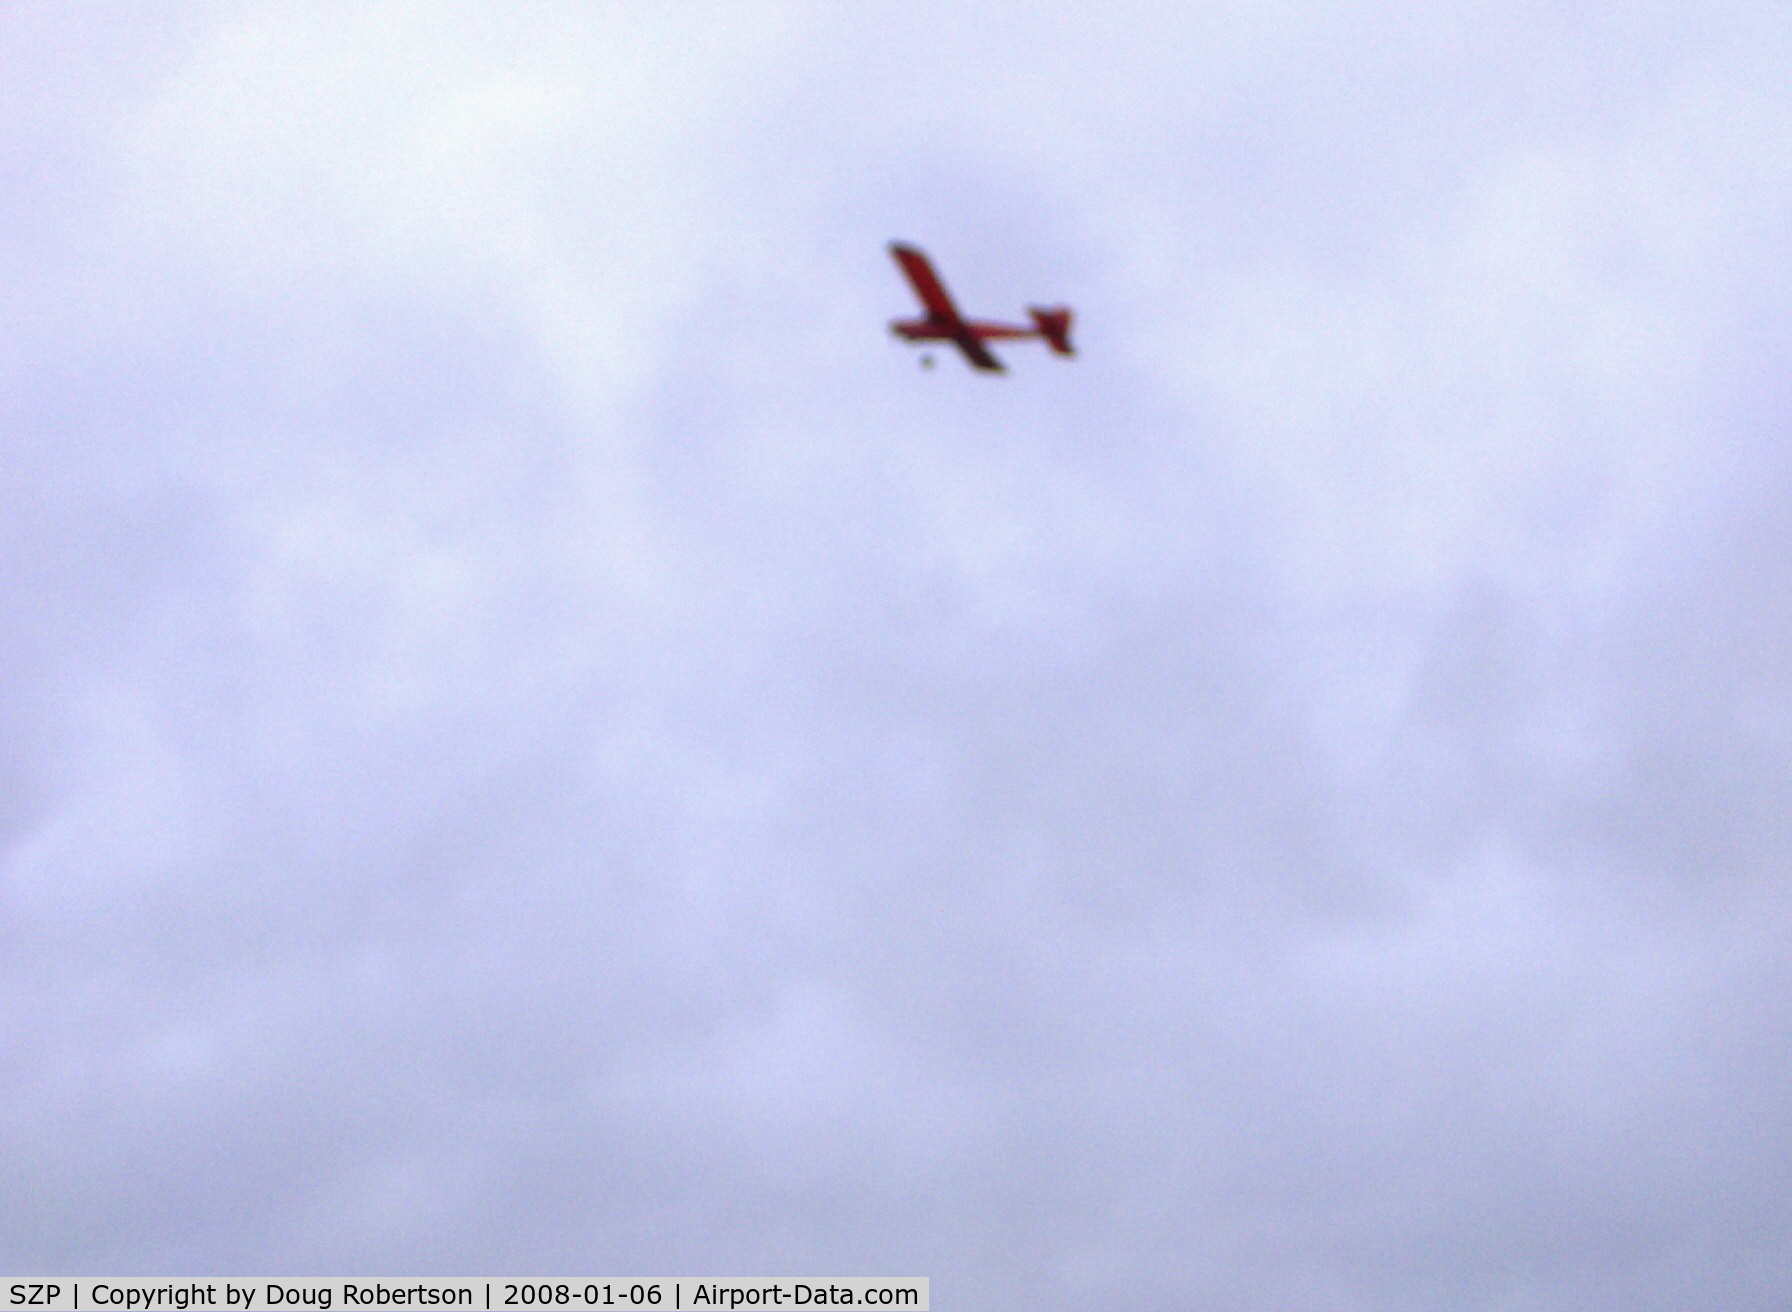 Santa Paula Airport (SZP) - RC drone High Wing Monoplane